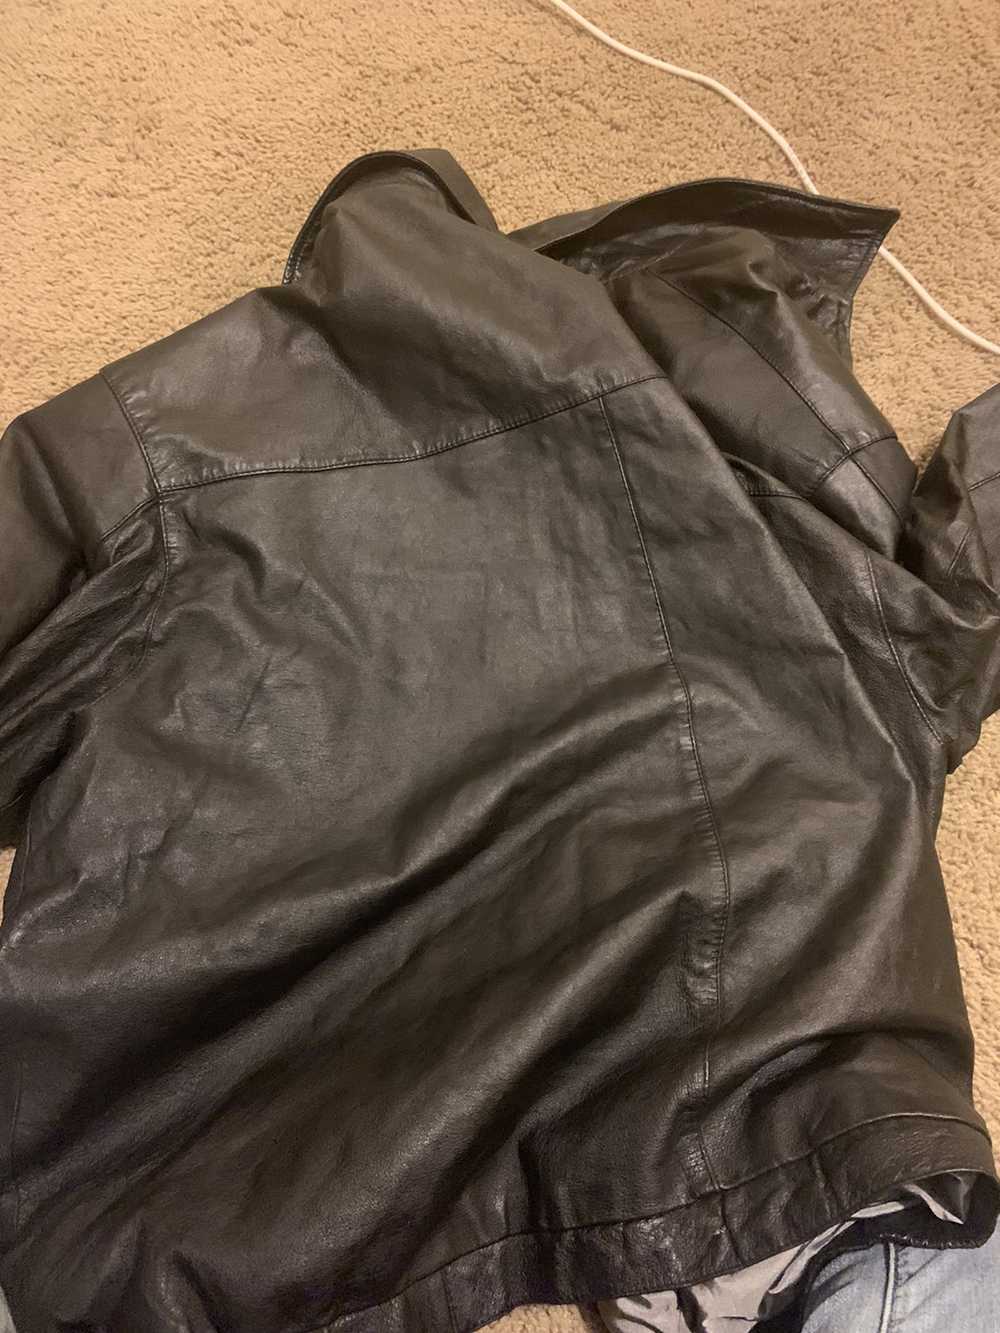 Vintage Harbor bay leather jacket - image 7